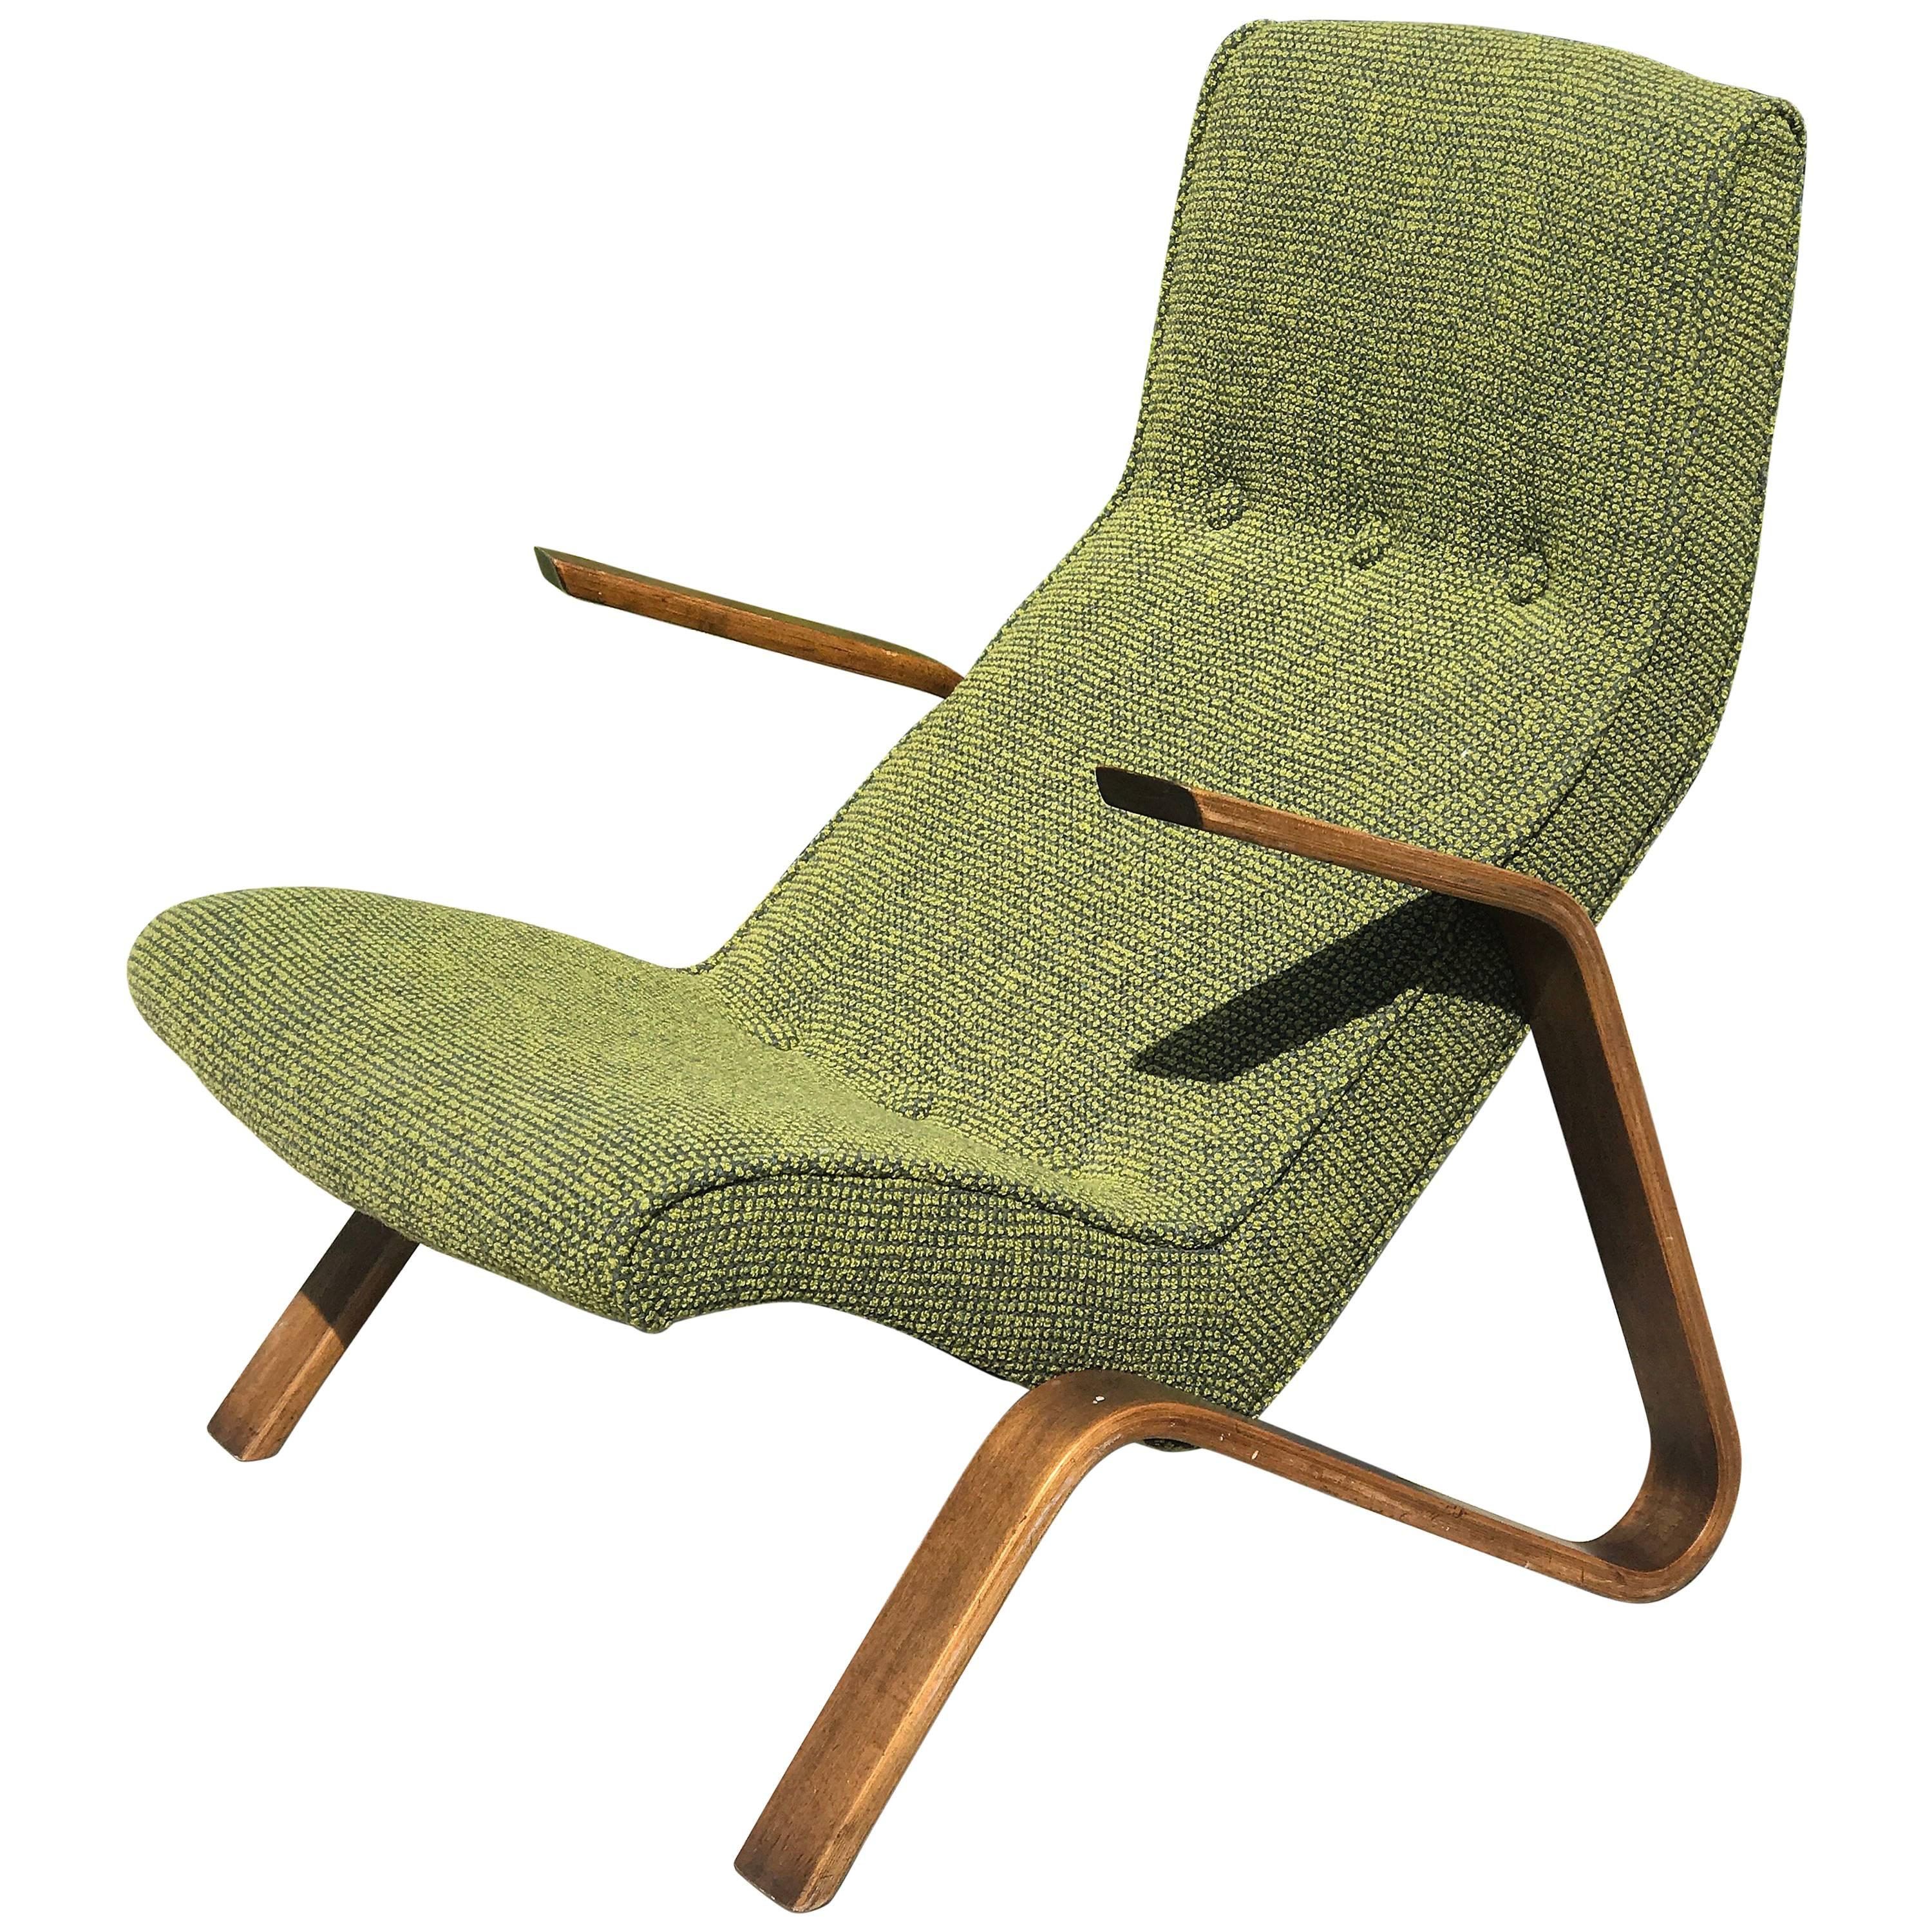 Early Eero Saarinen "Grasshopper" Lounge Chair for Knoll